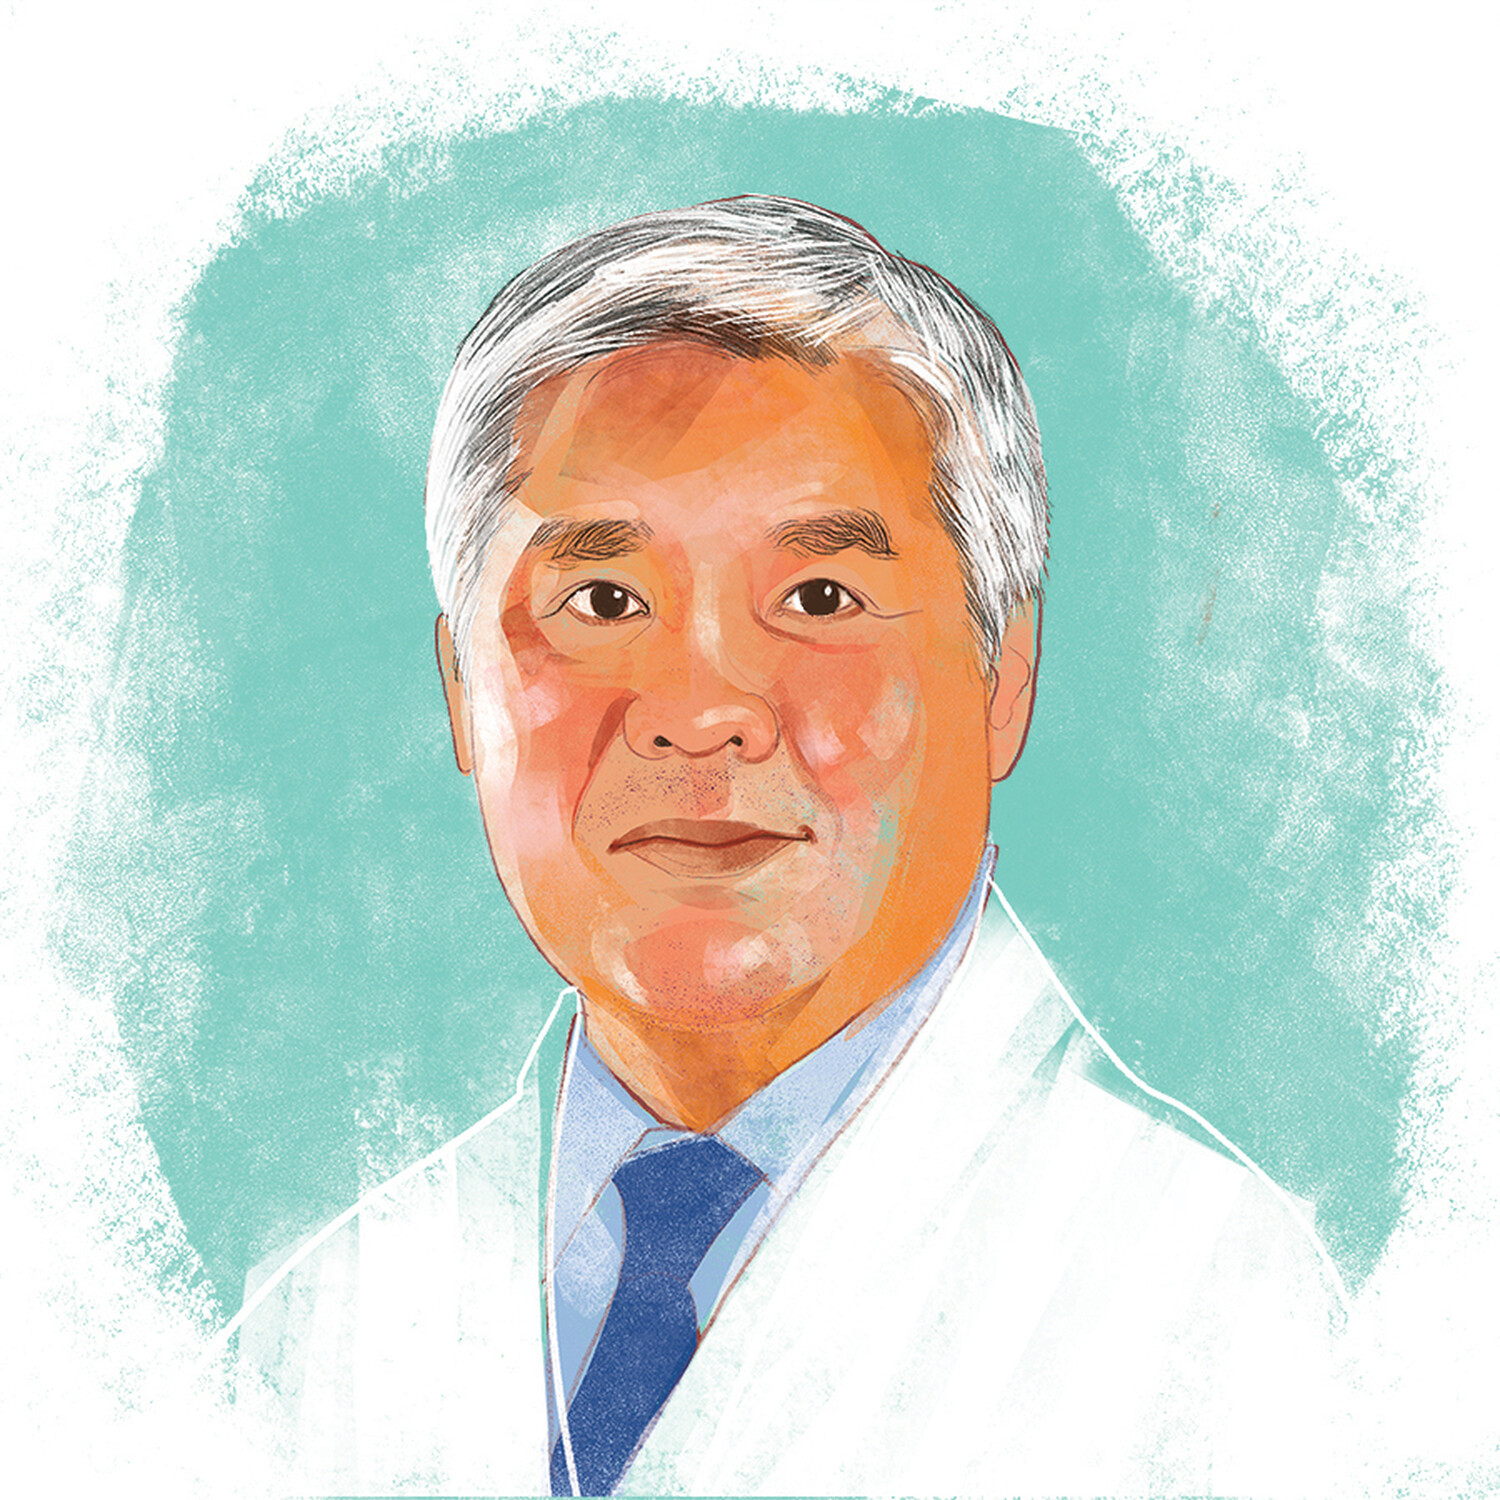 Illustration of Masonic Cancer Center director Douglas Yee, M.D.